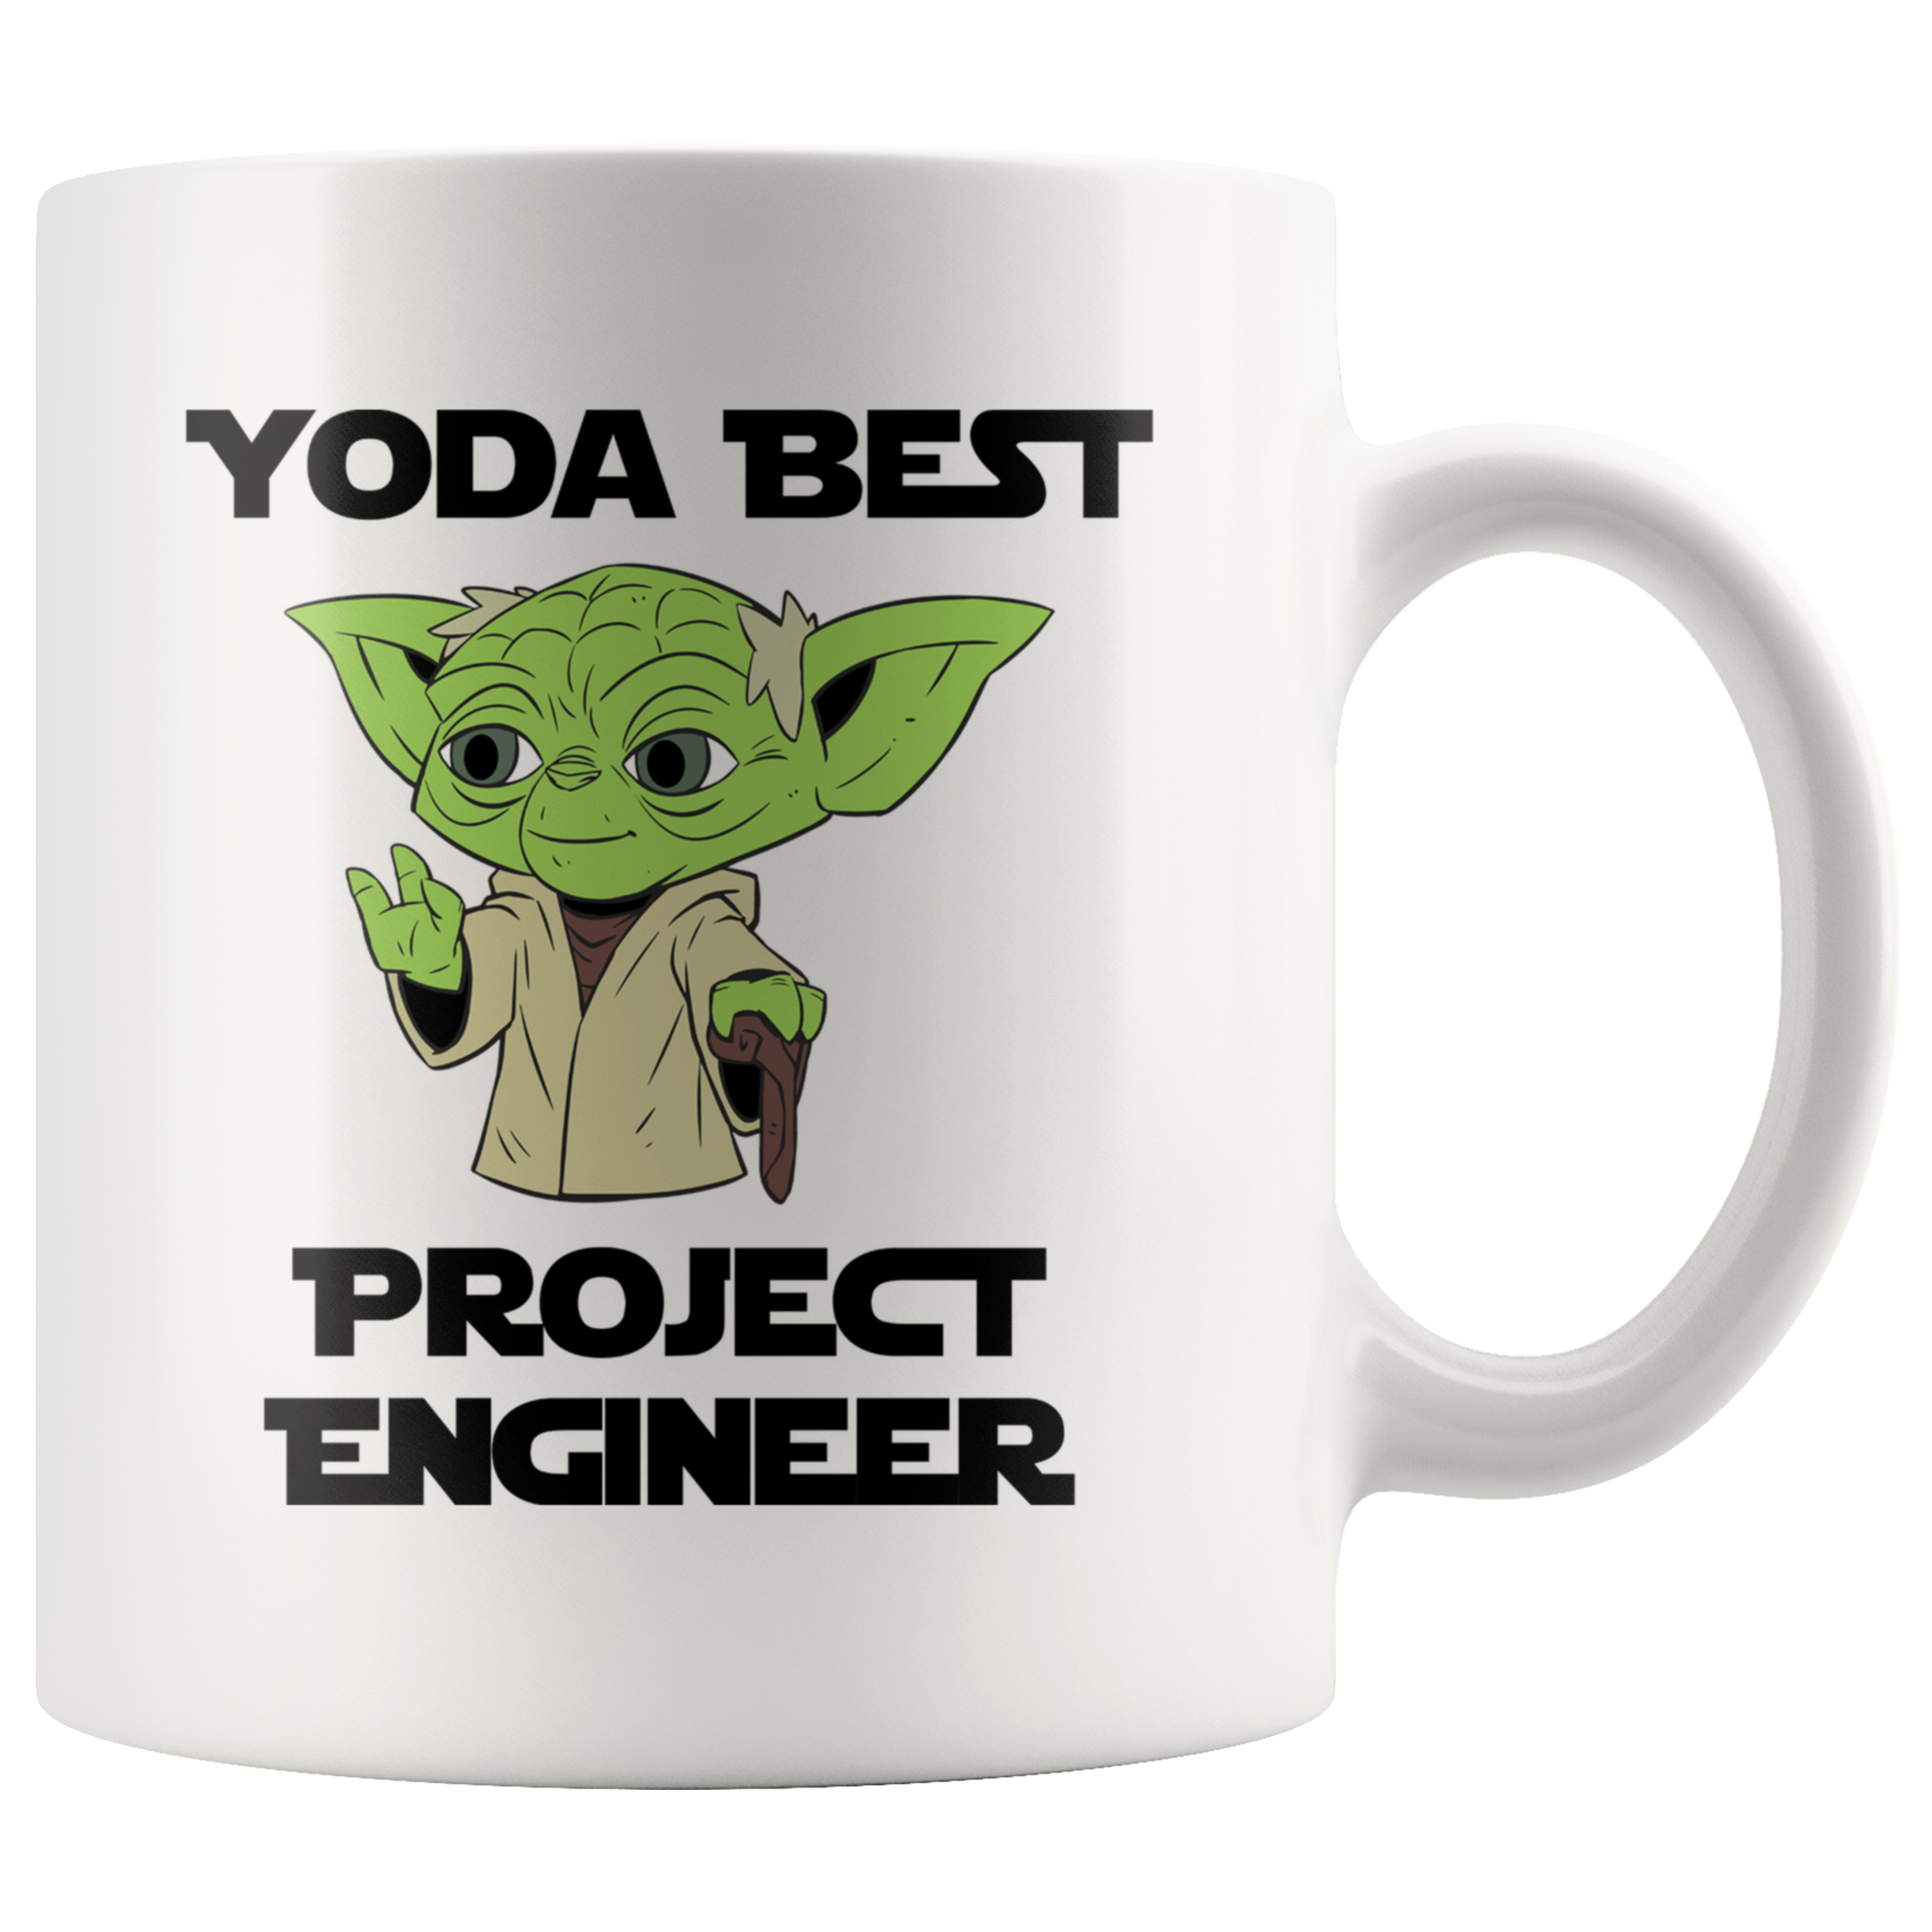 Yoda Best Project Engineer Mug - TL